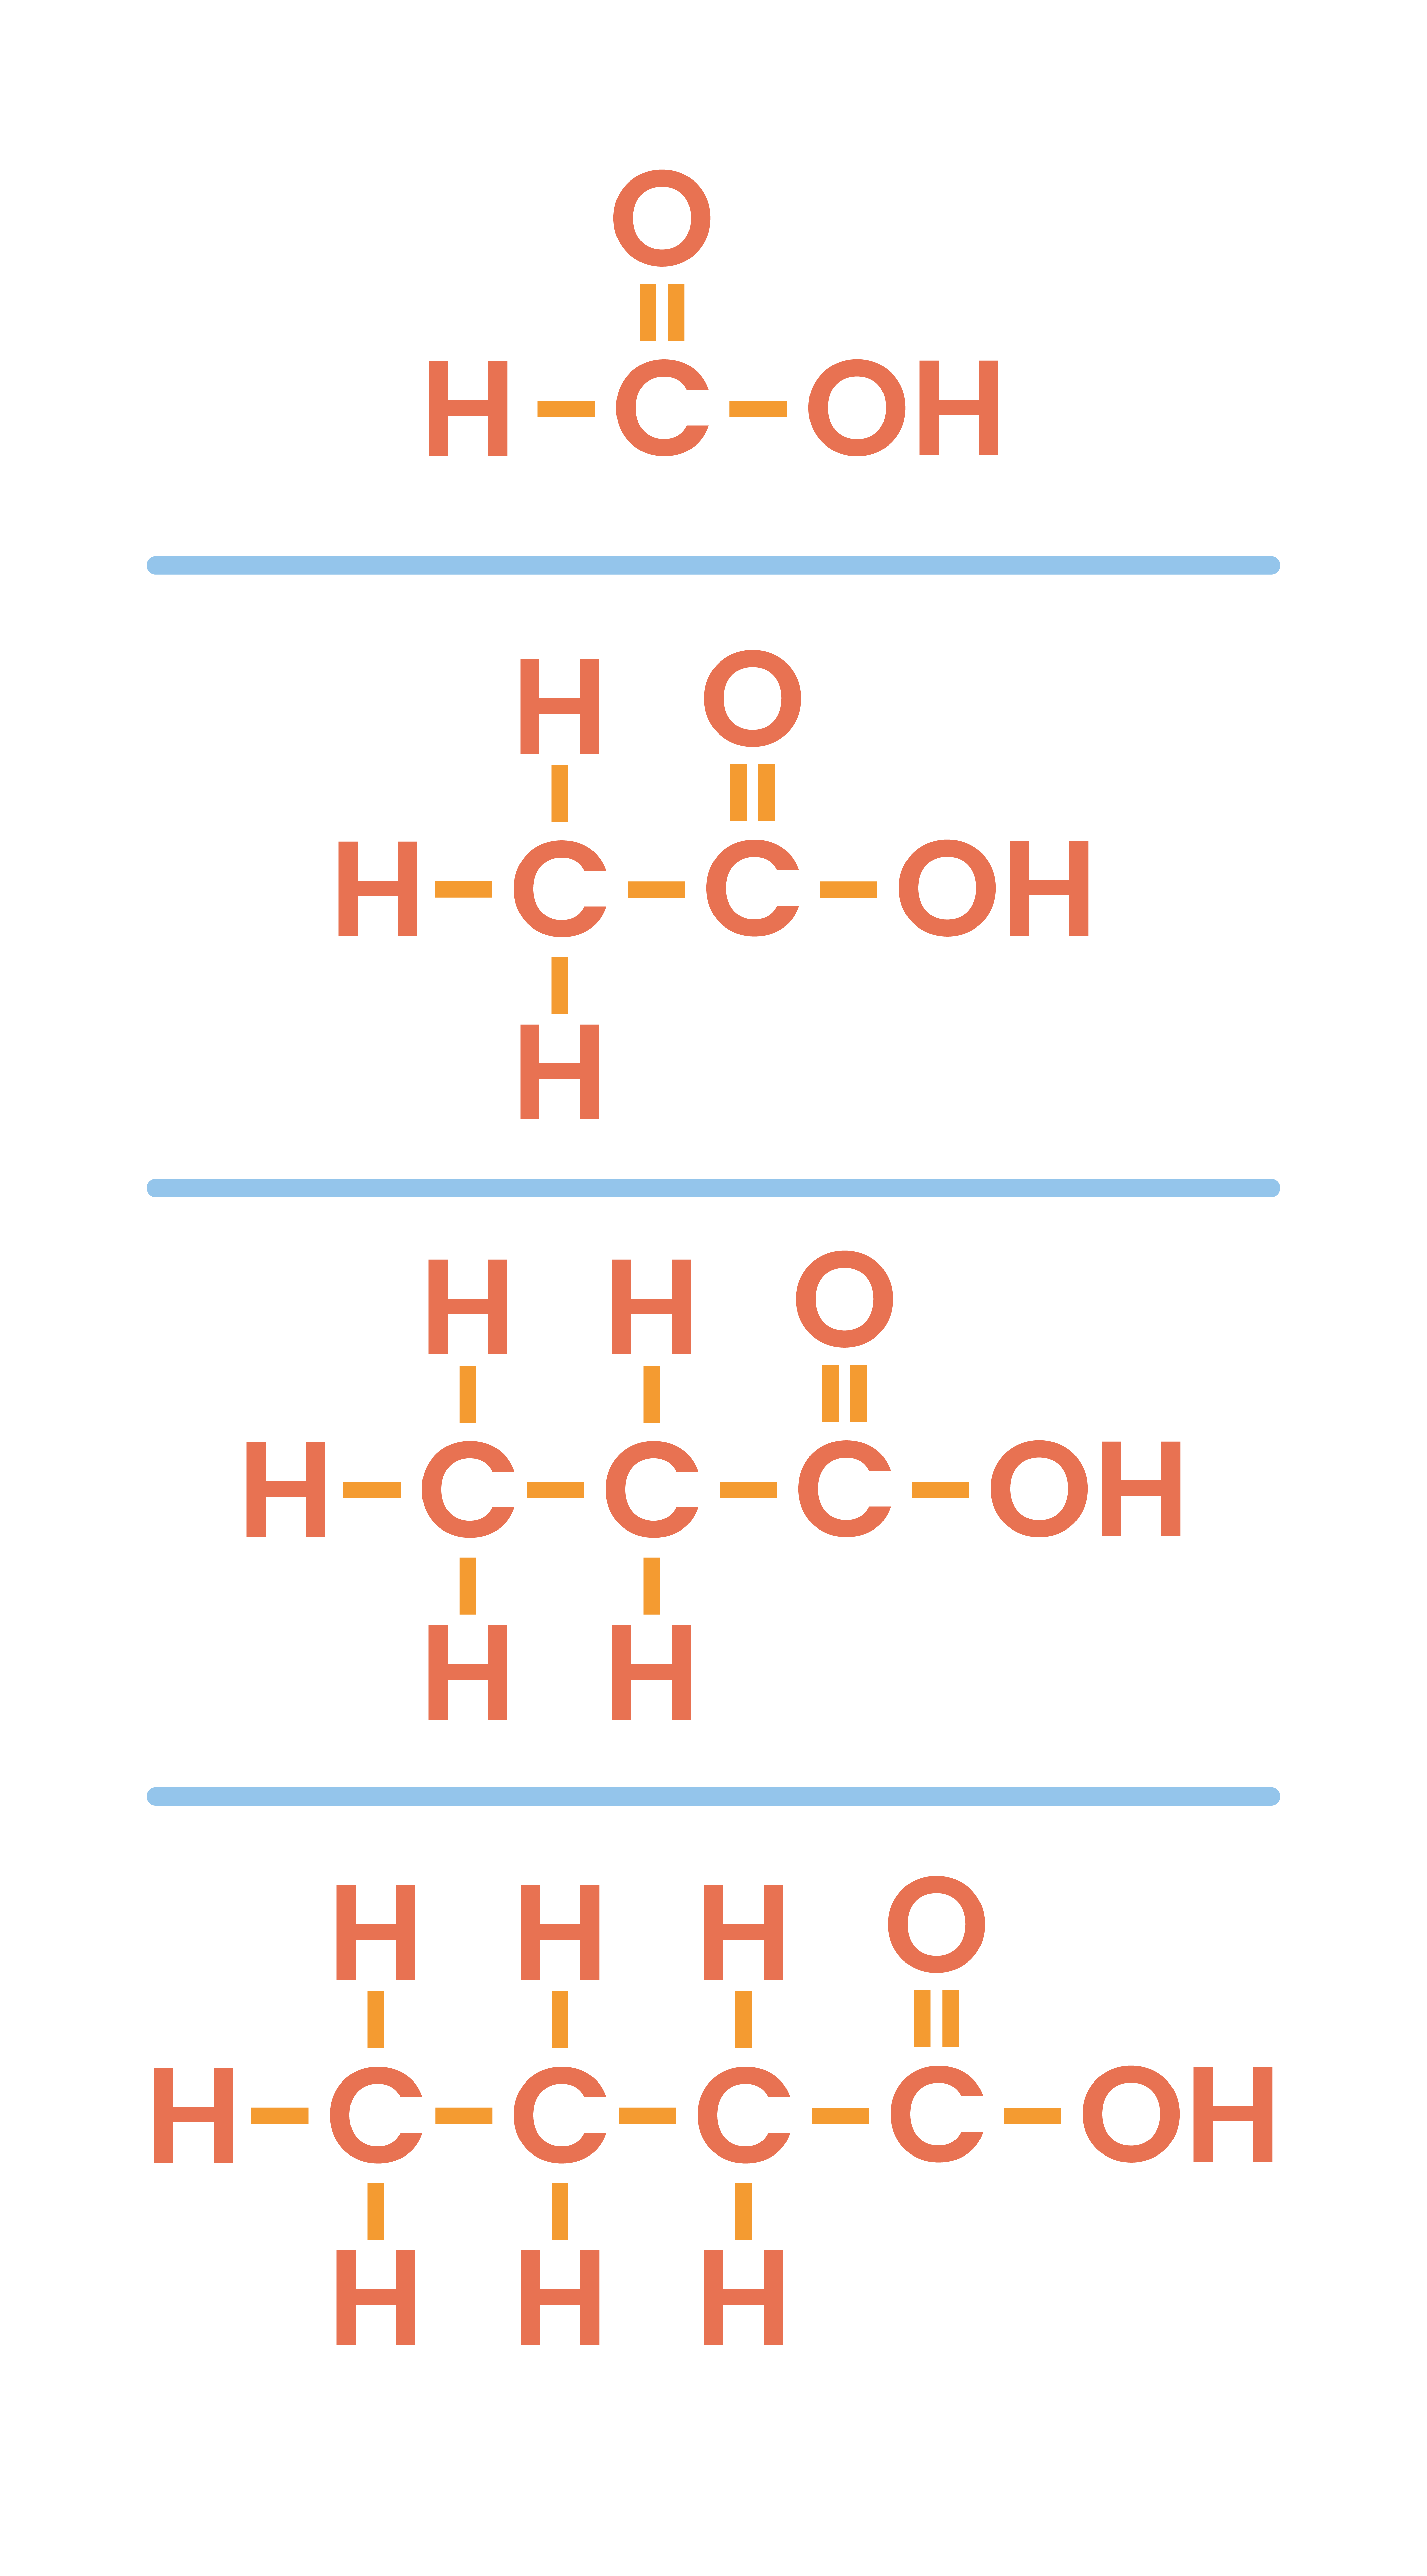 edexcel_igcse_chemistry_topic 26_ carboxylic acids_002_carboxylic acids diagram